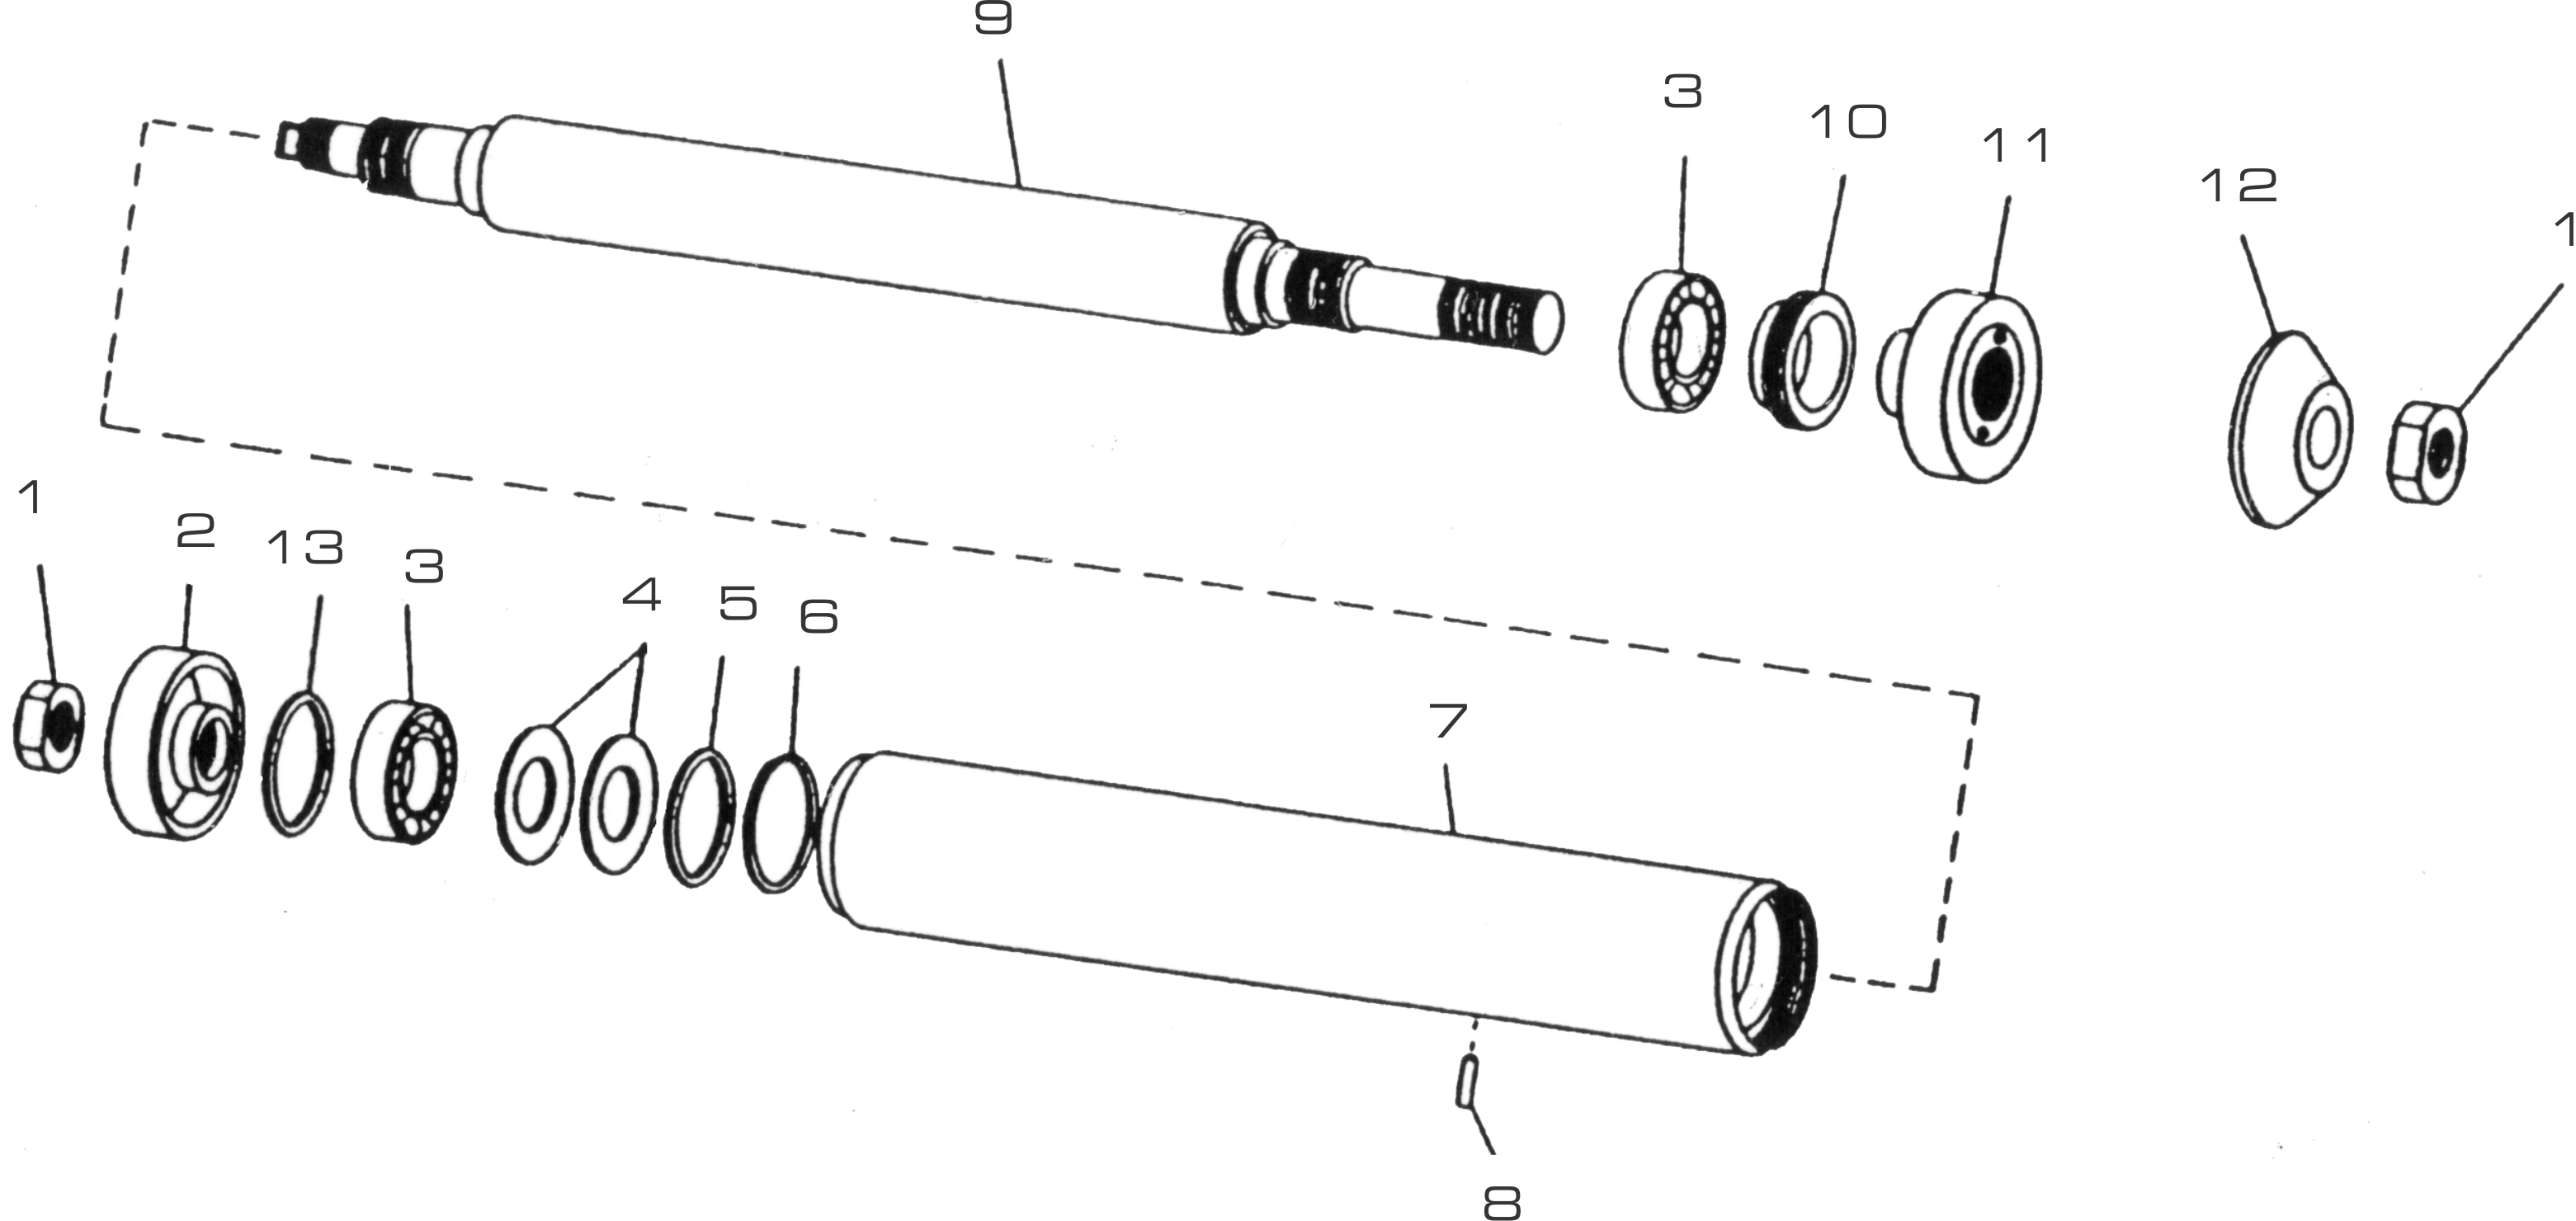 Tool Post Grinder External Spindle Replacement Parts | Dumore Series 57 Tool Post Grinders